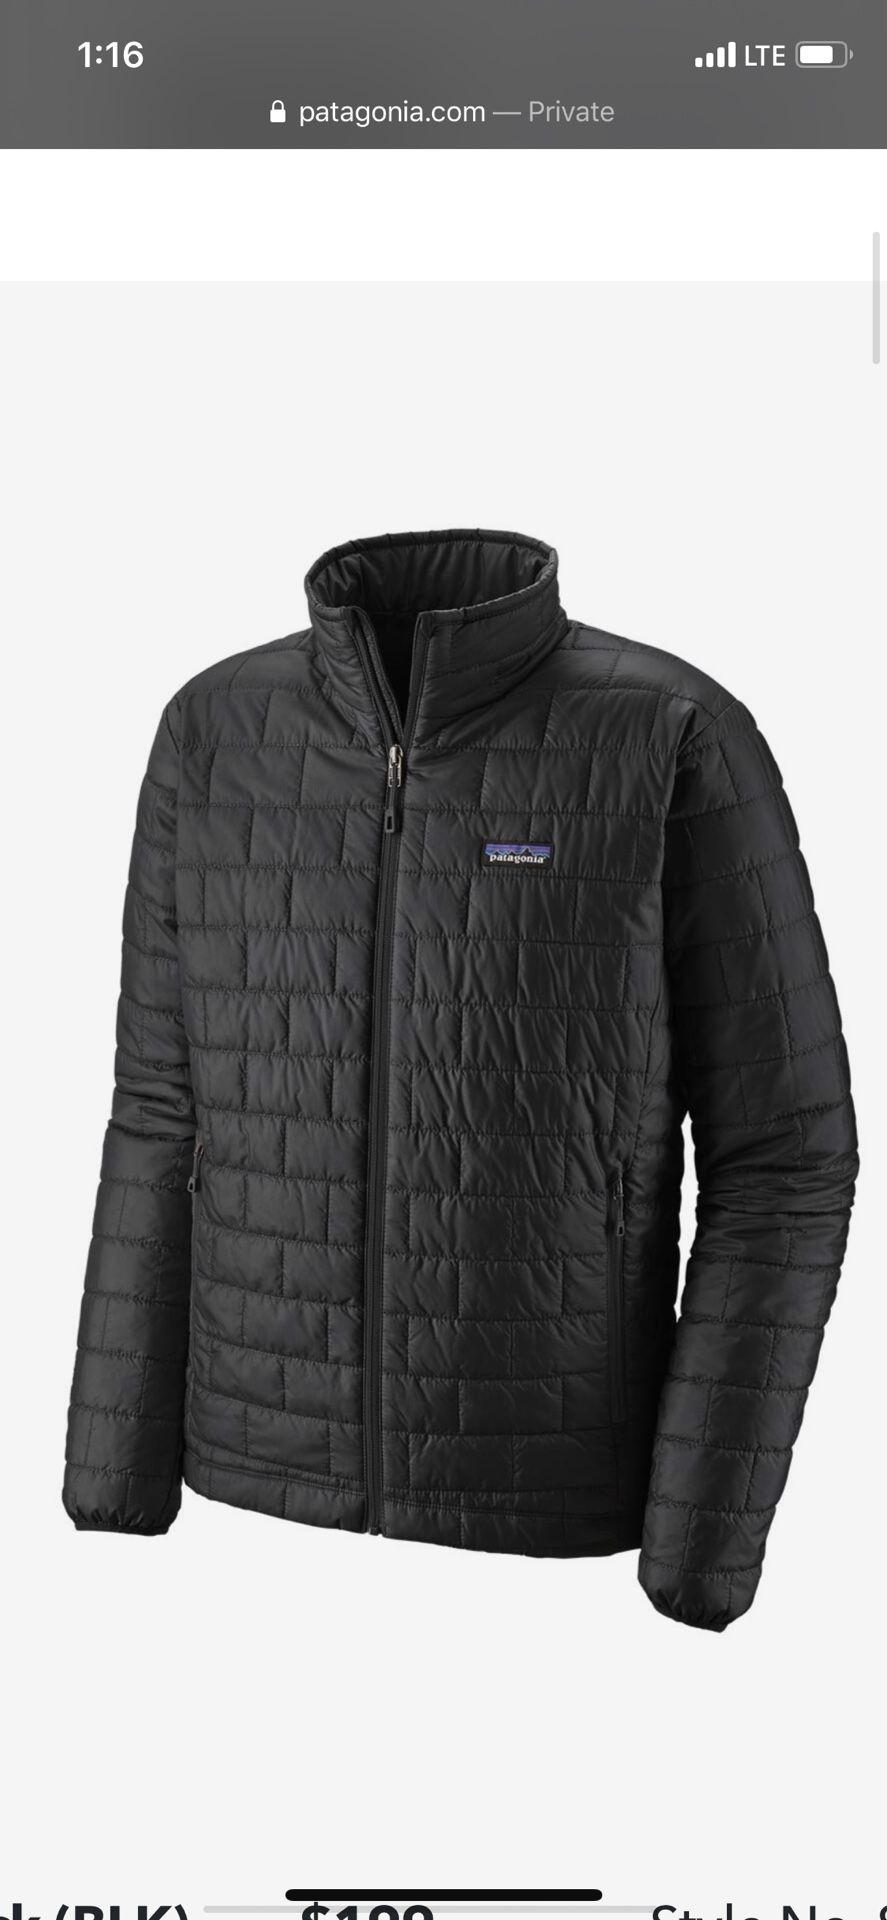 Brand New Patagonia Men’s S Jacket